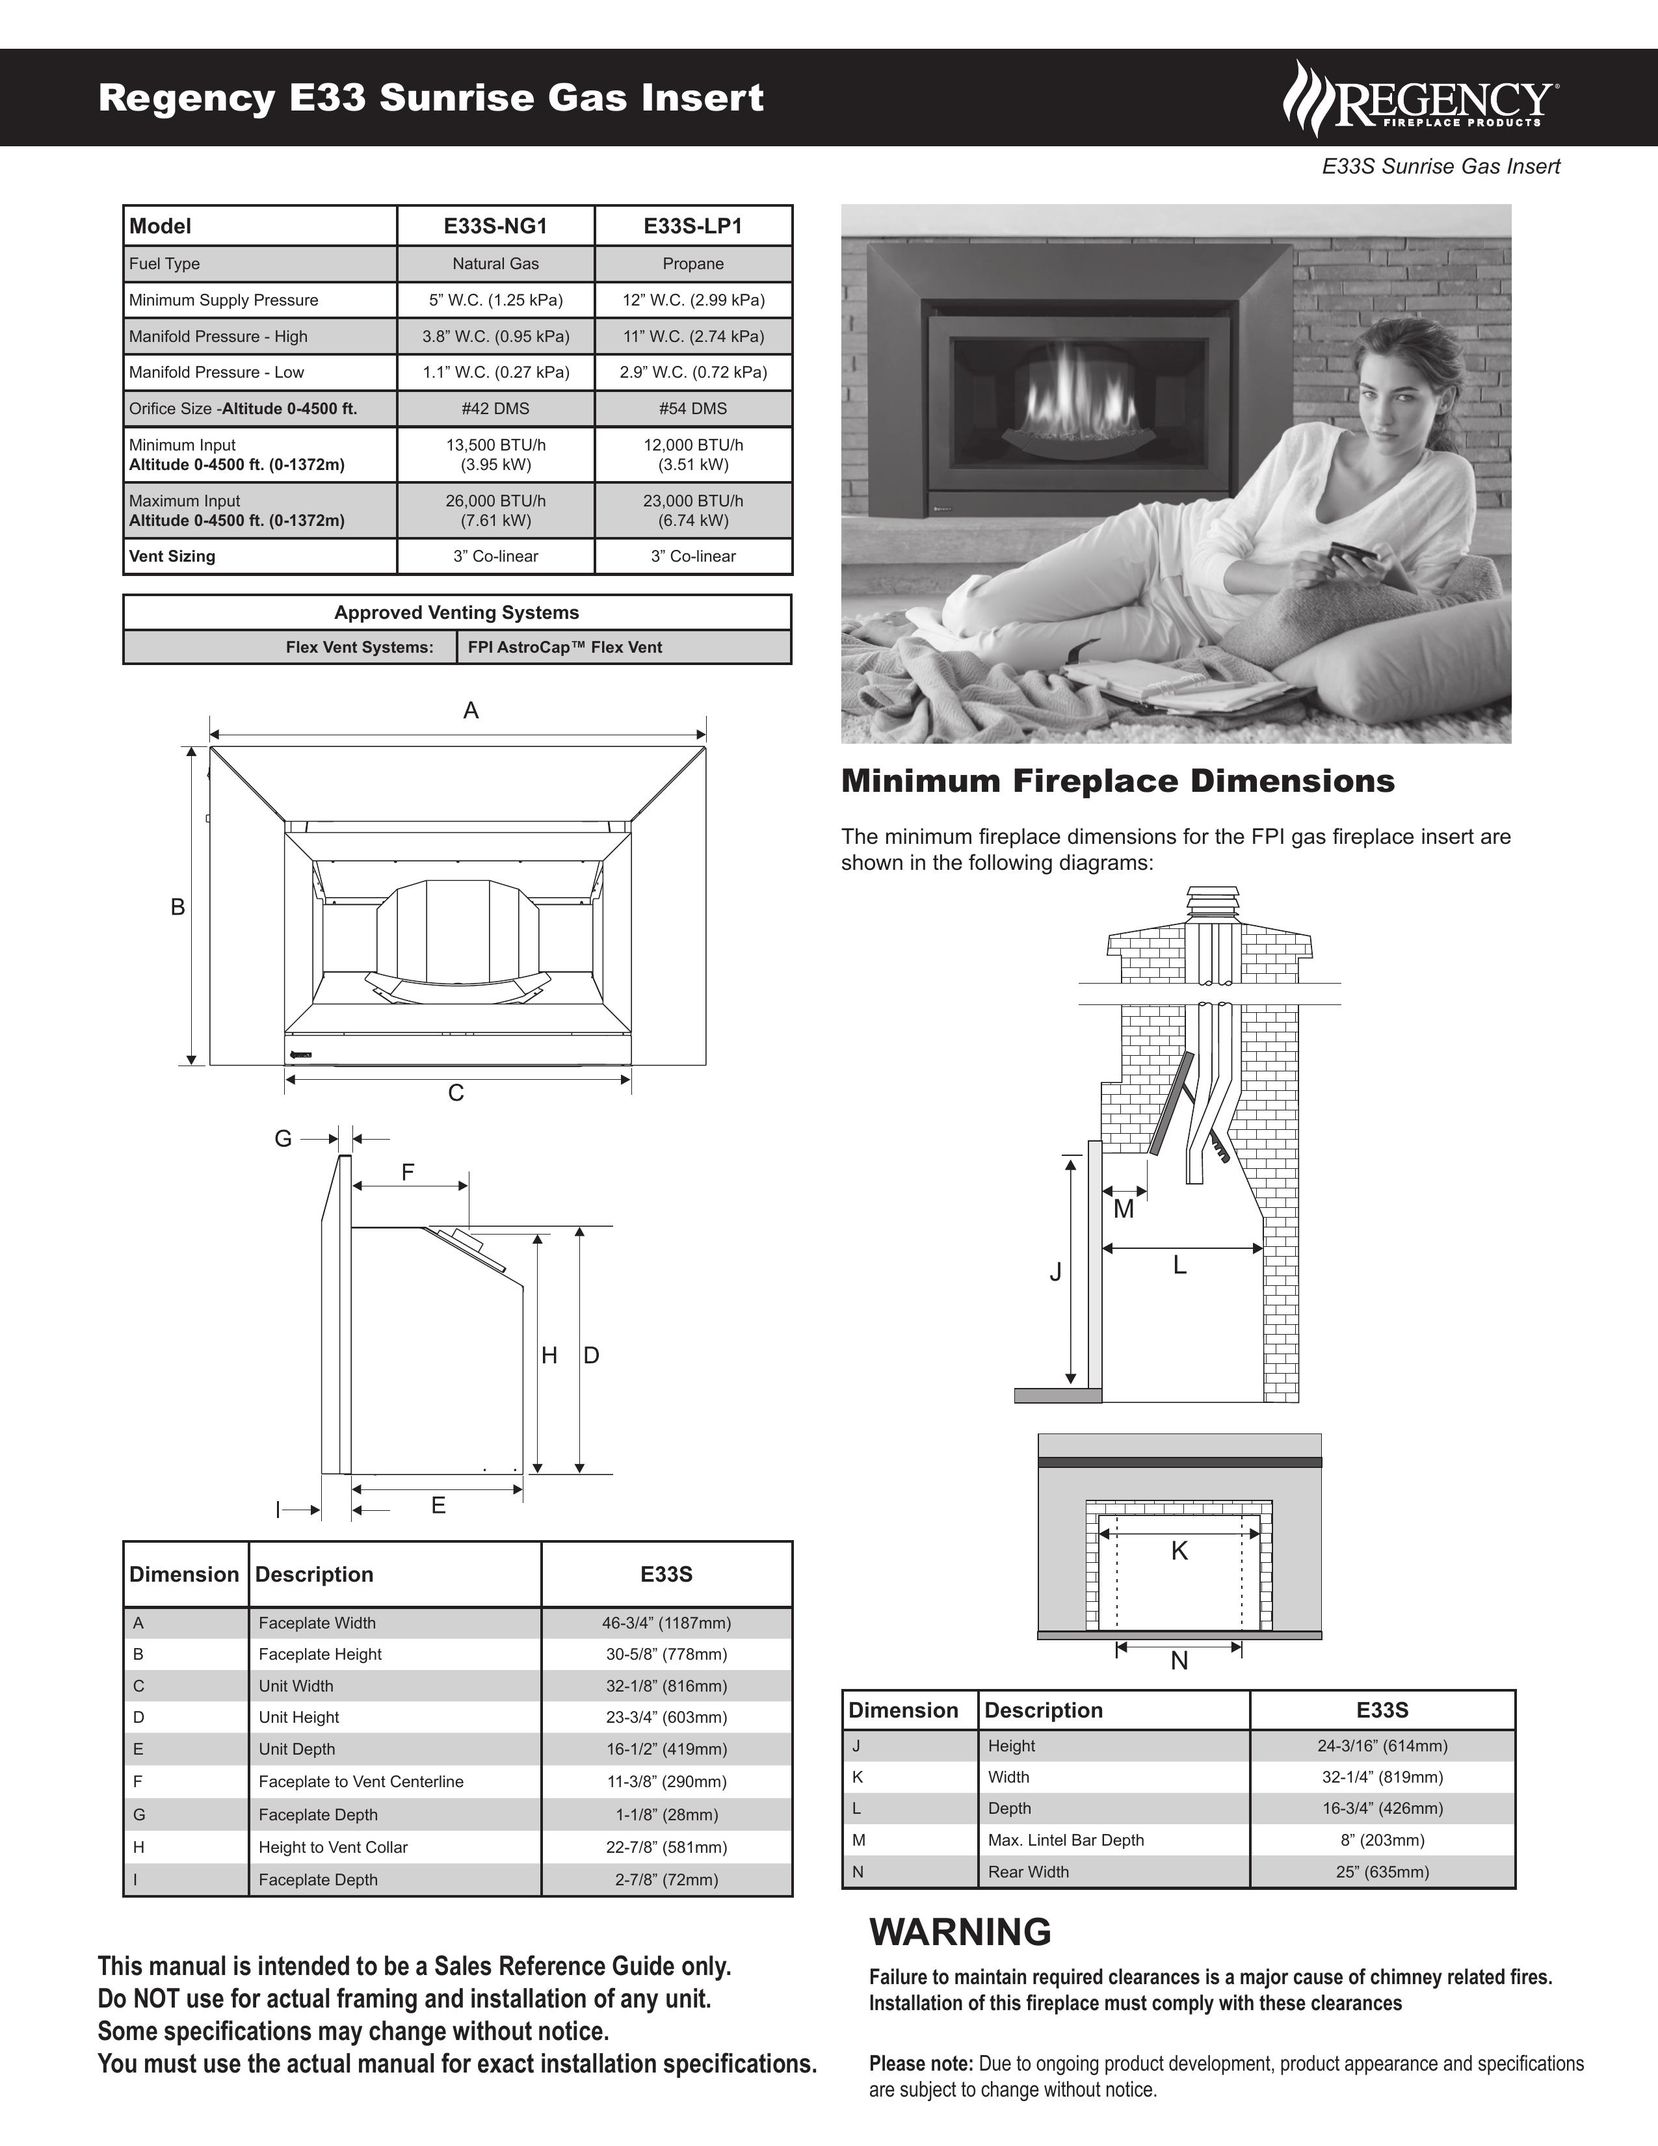 Regency E33S Indoor Fireplace User Manual